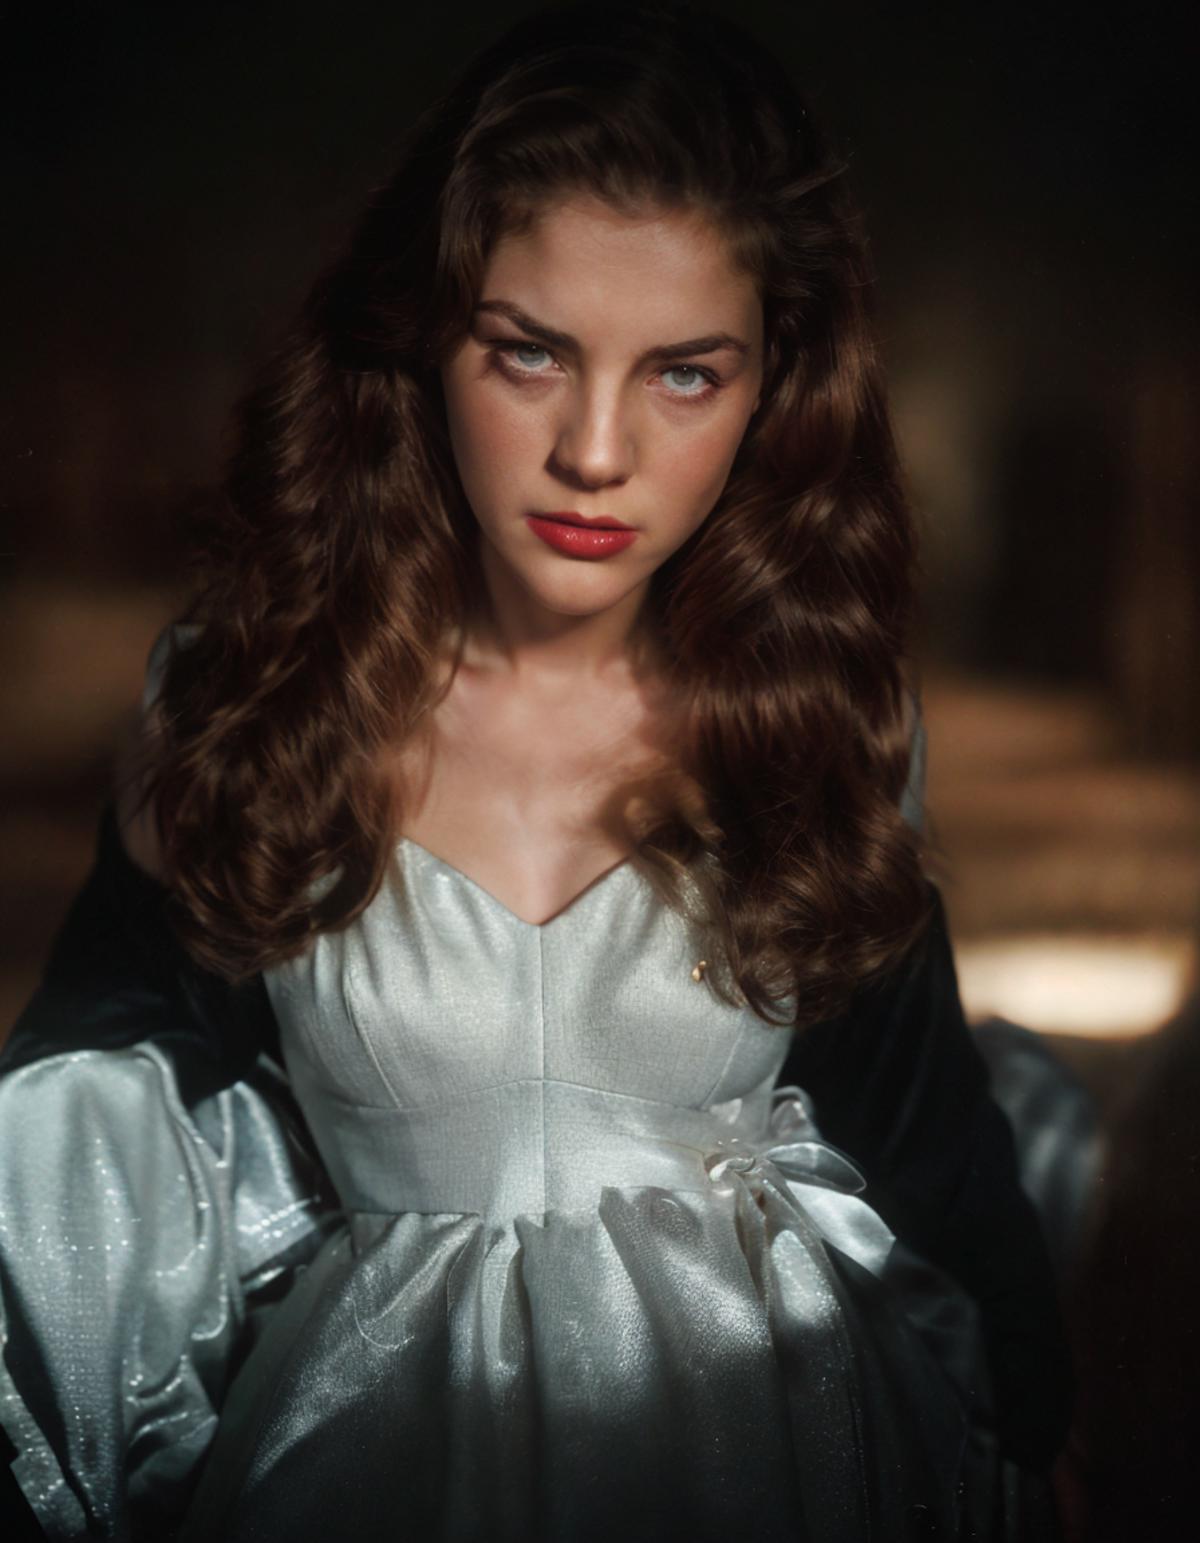 Lauren Bacall image by lebronmclovin